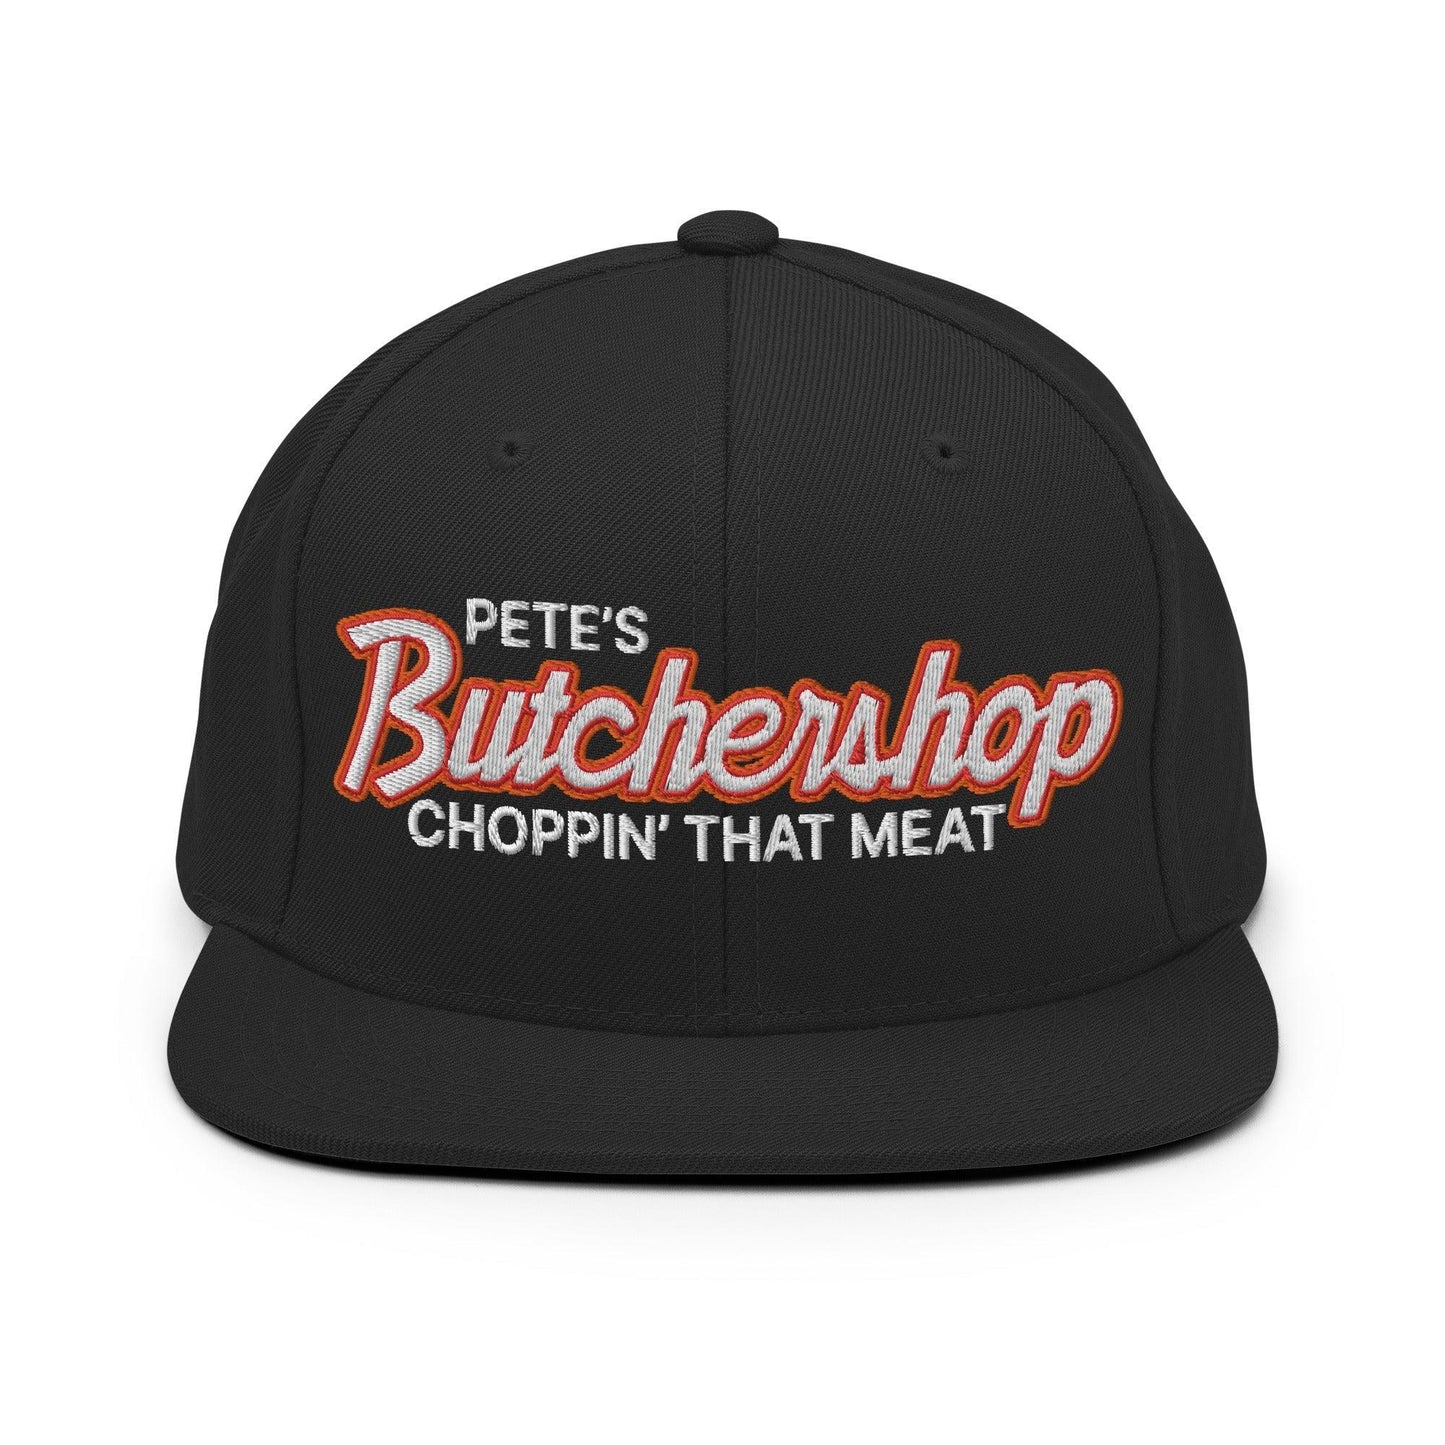 Pete's Butchershop Choppin' That Meat Script Snapback Hat Black